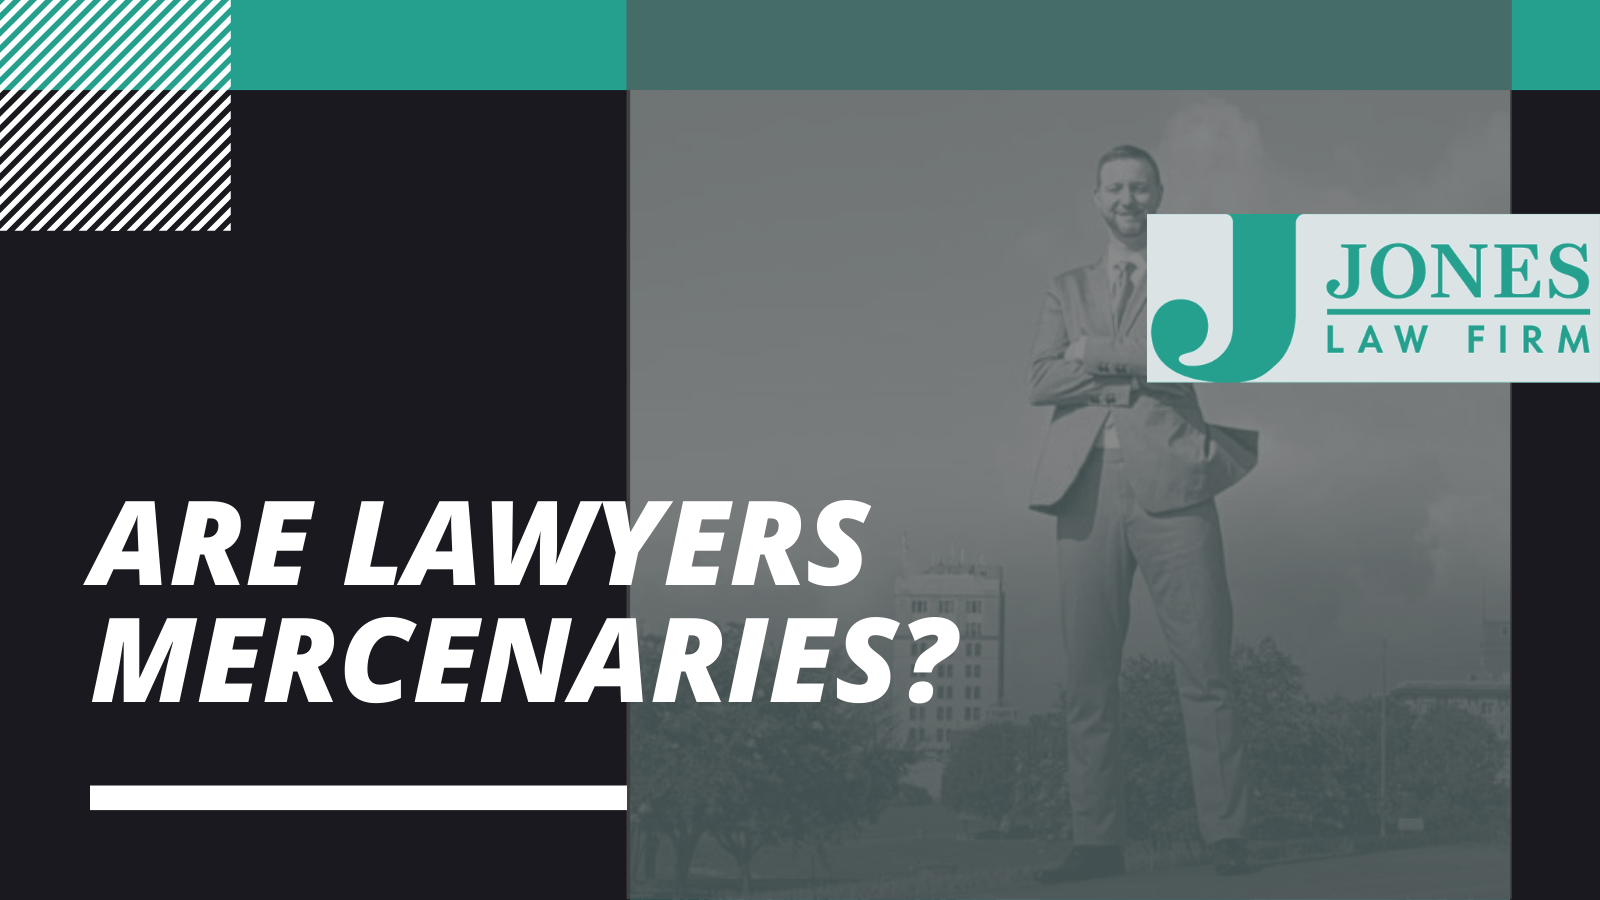 Are lawyers mercenaries - Jones law firm - Alexandria louisiana